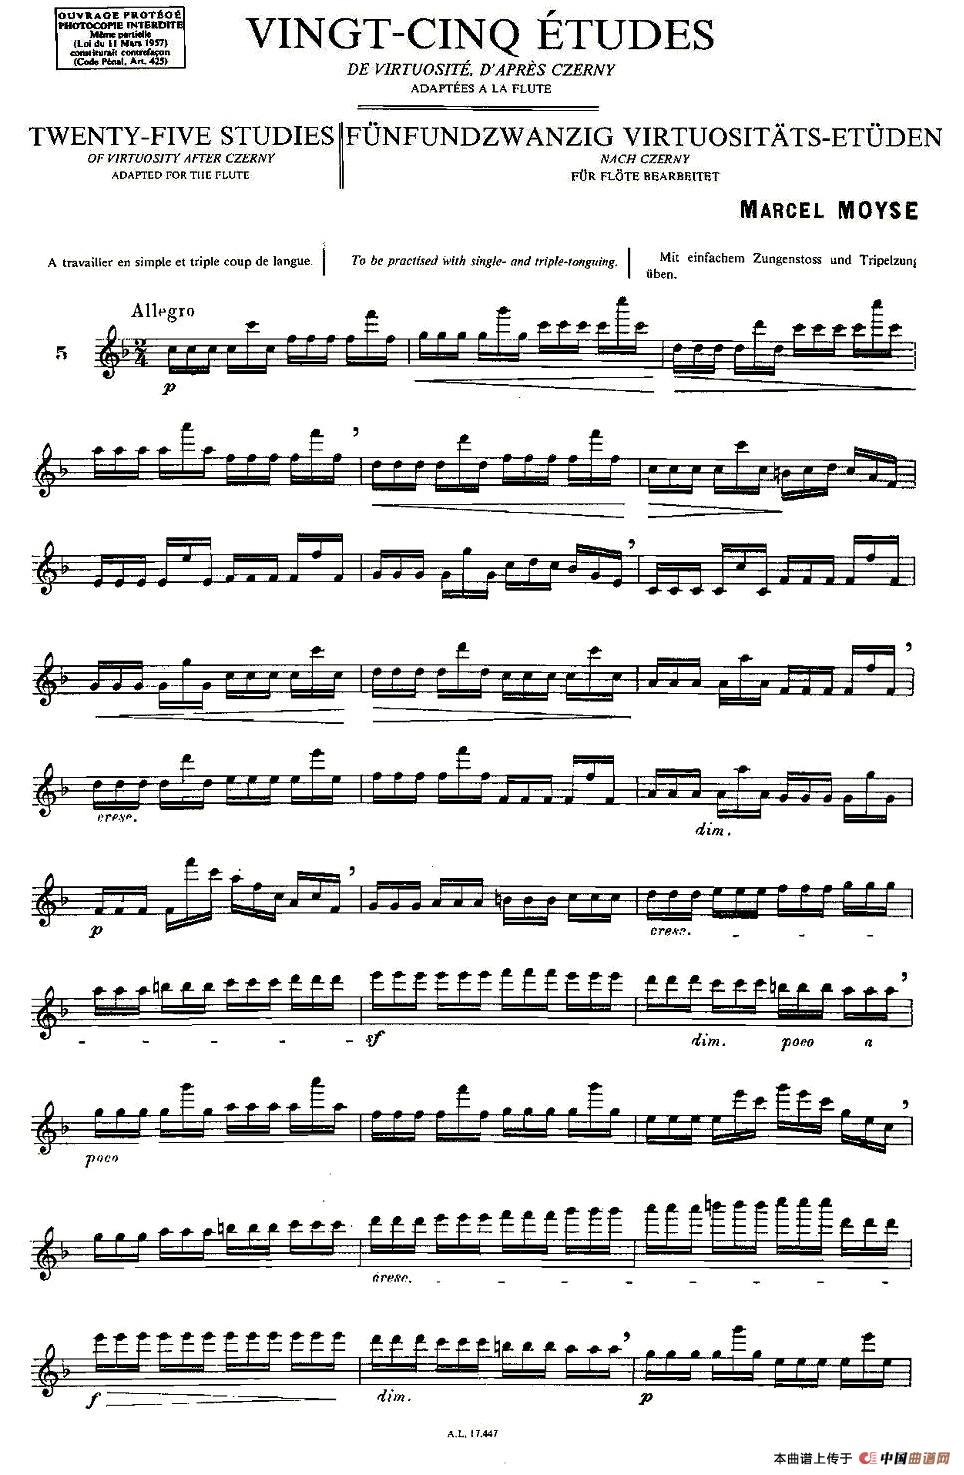 Moyse - 25 Studies after Czerny flute [5]（25首改编自车尔